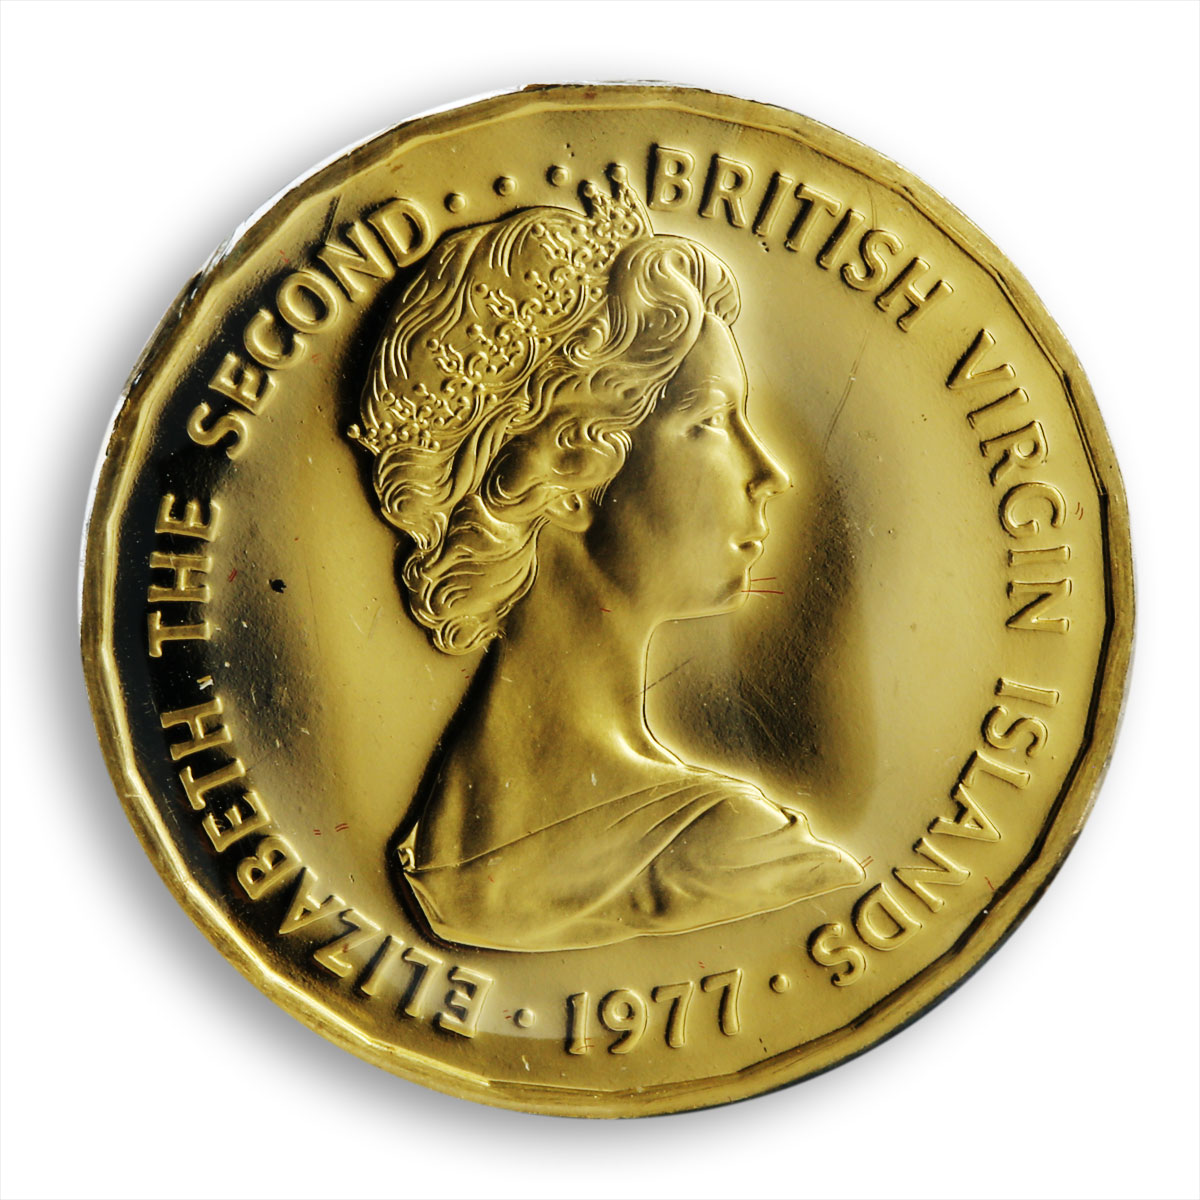 British Virgin Islands 100 dollars 25 anniversary of Queen Crown gold coin 1977